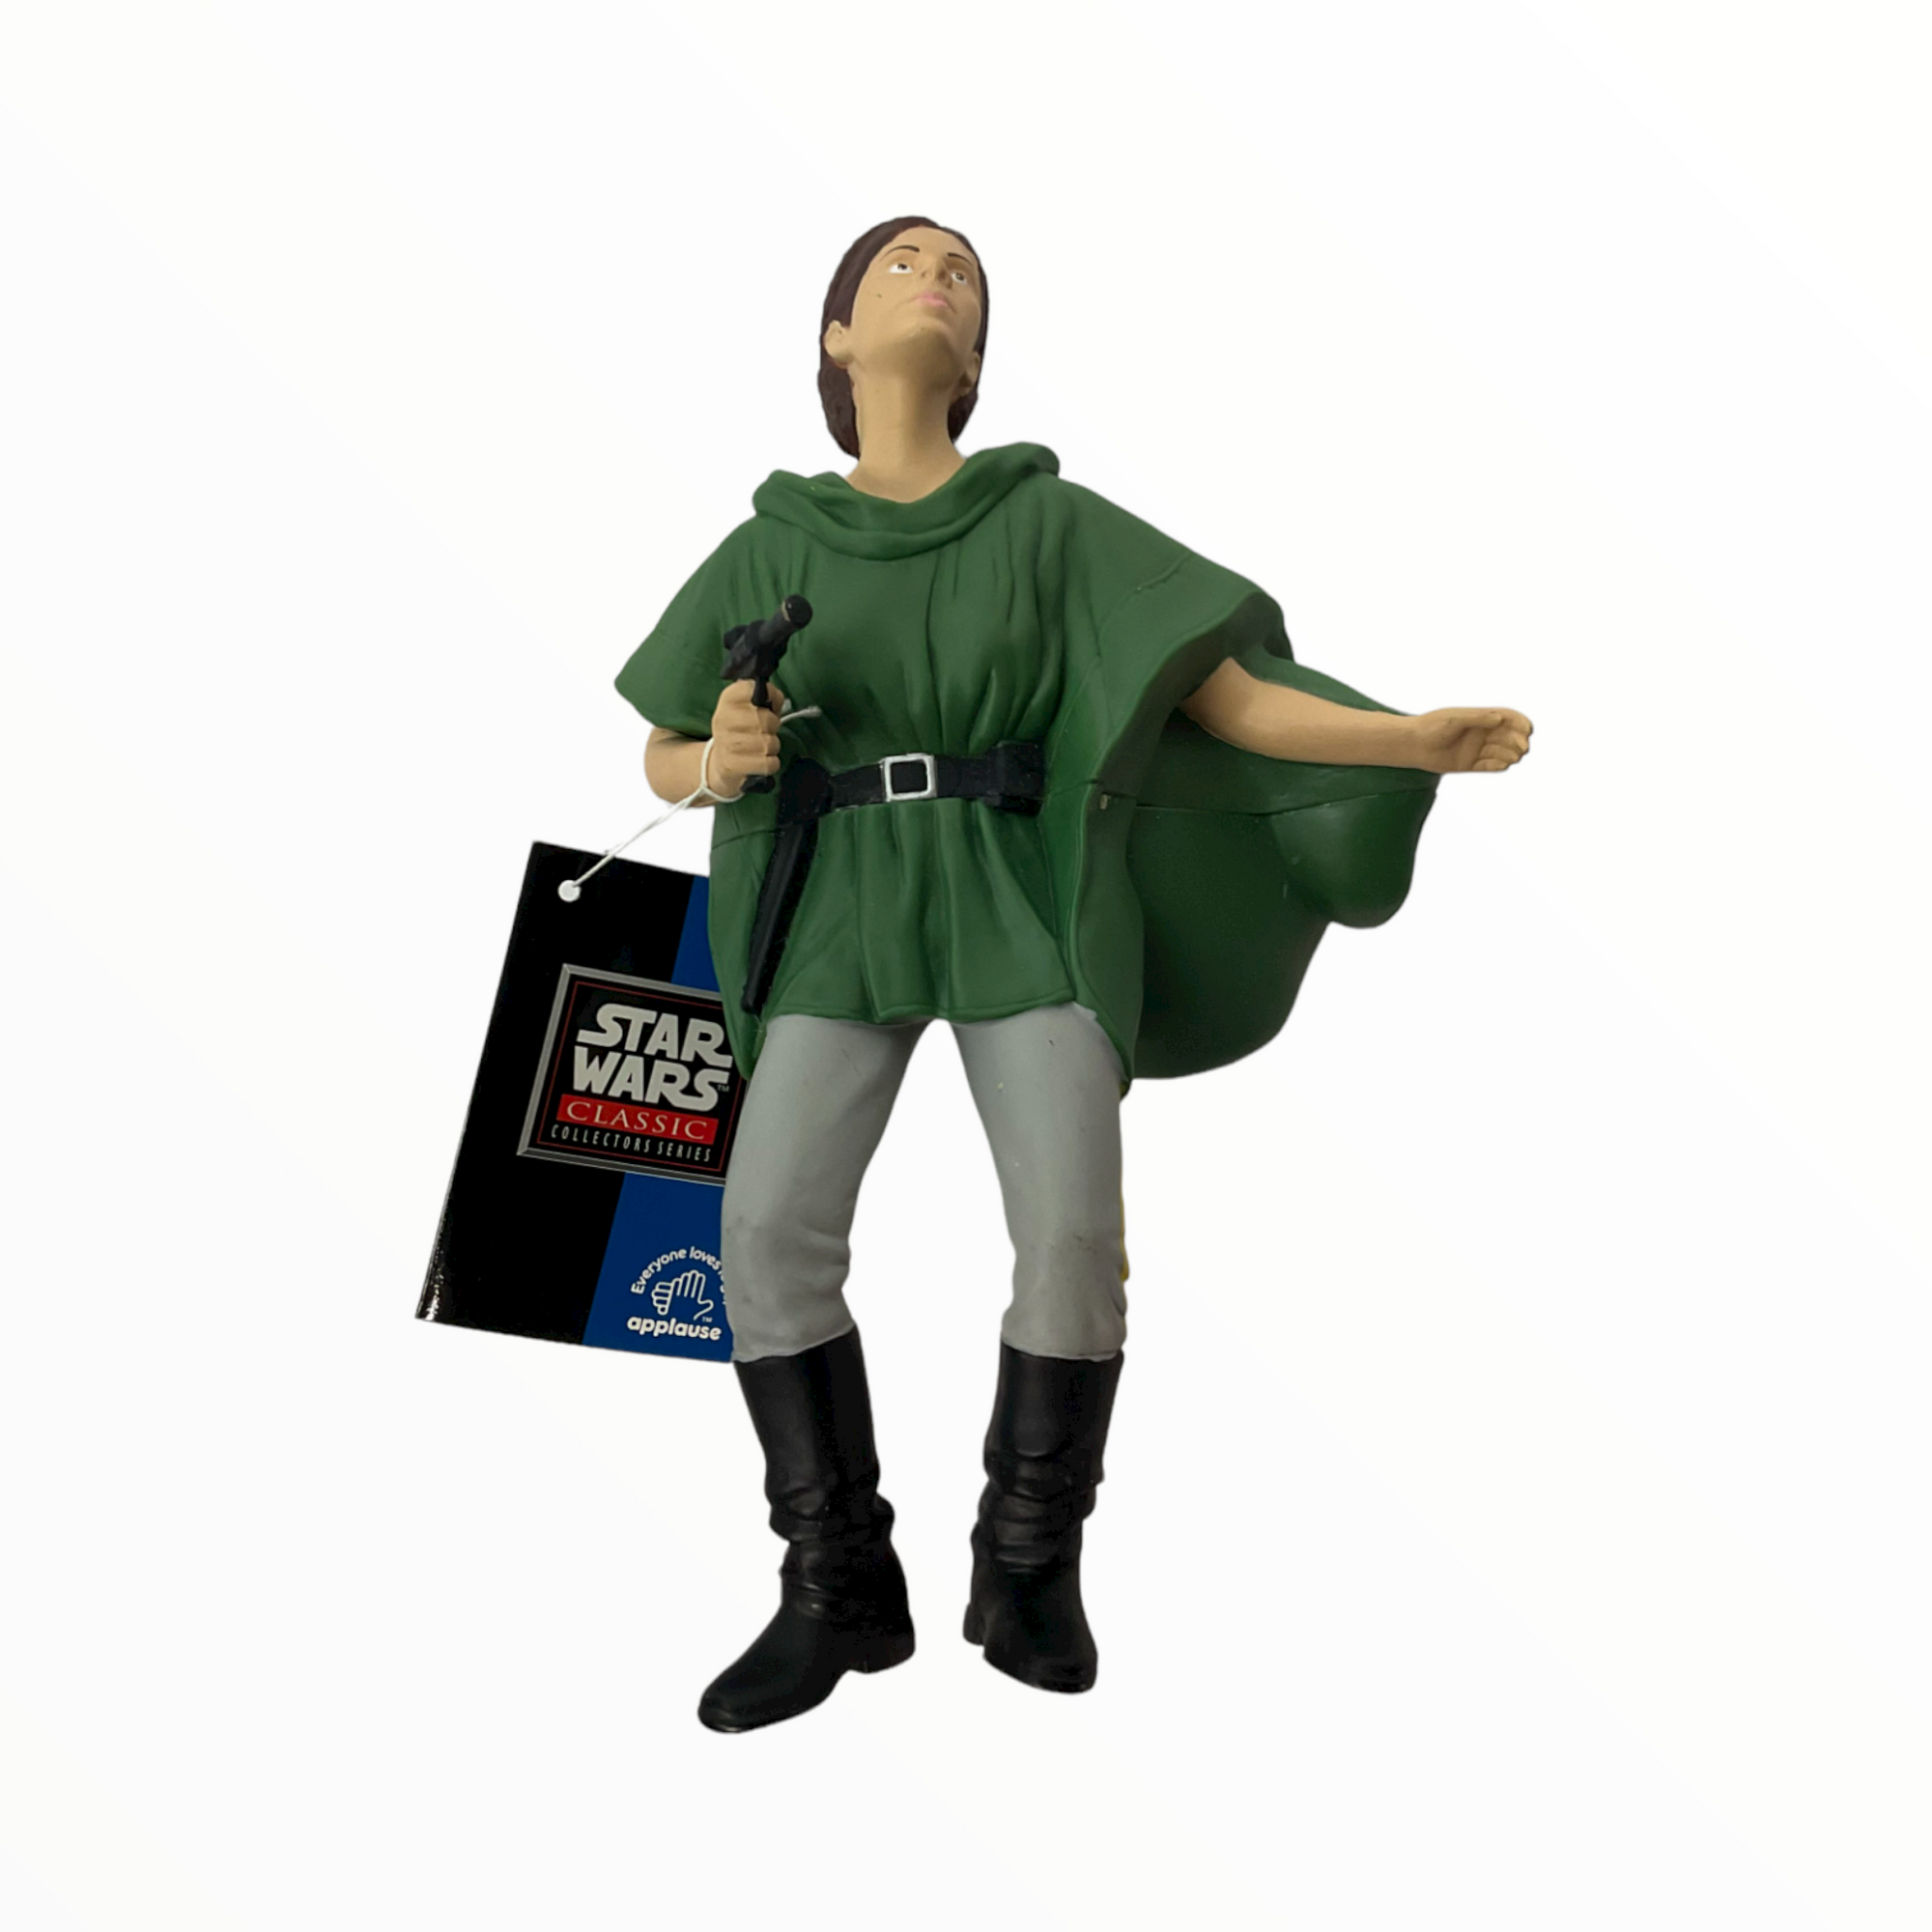 Star Wars Classic Collector Series 8" Princess Leia in Endor Gear Vinyl Doll